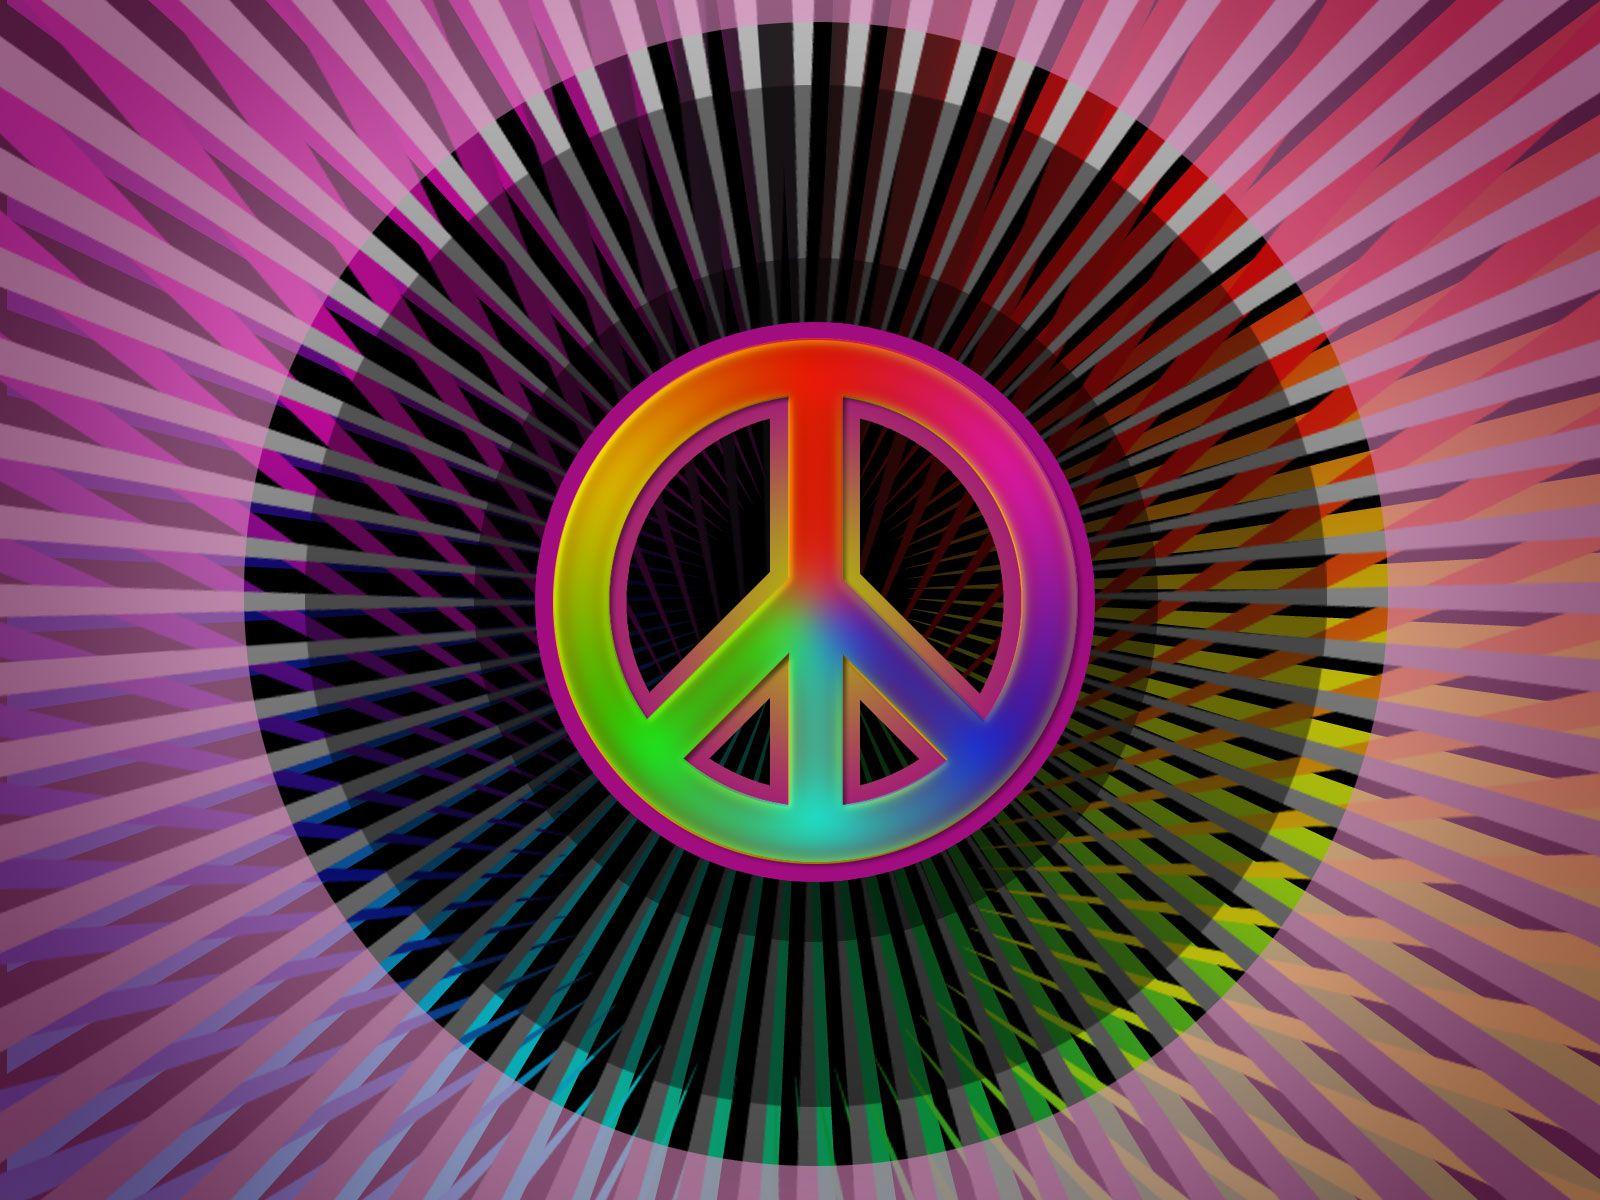 Colorful Peace Sign Backgrounds For Desktop - Wallpaper Cave